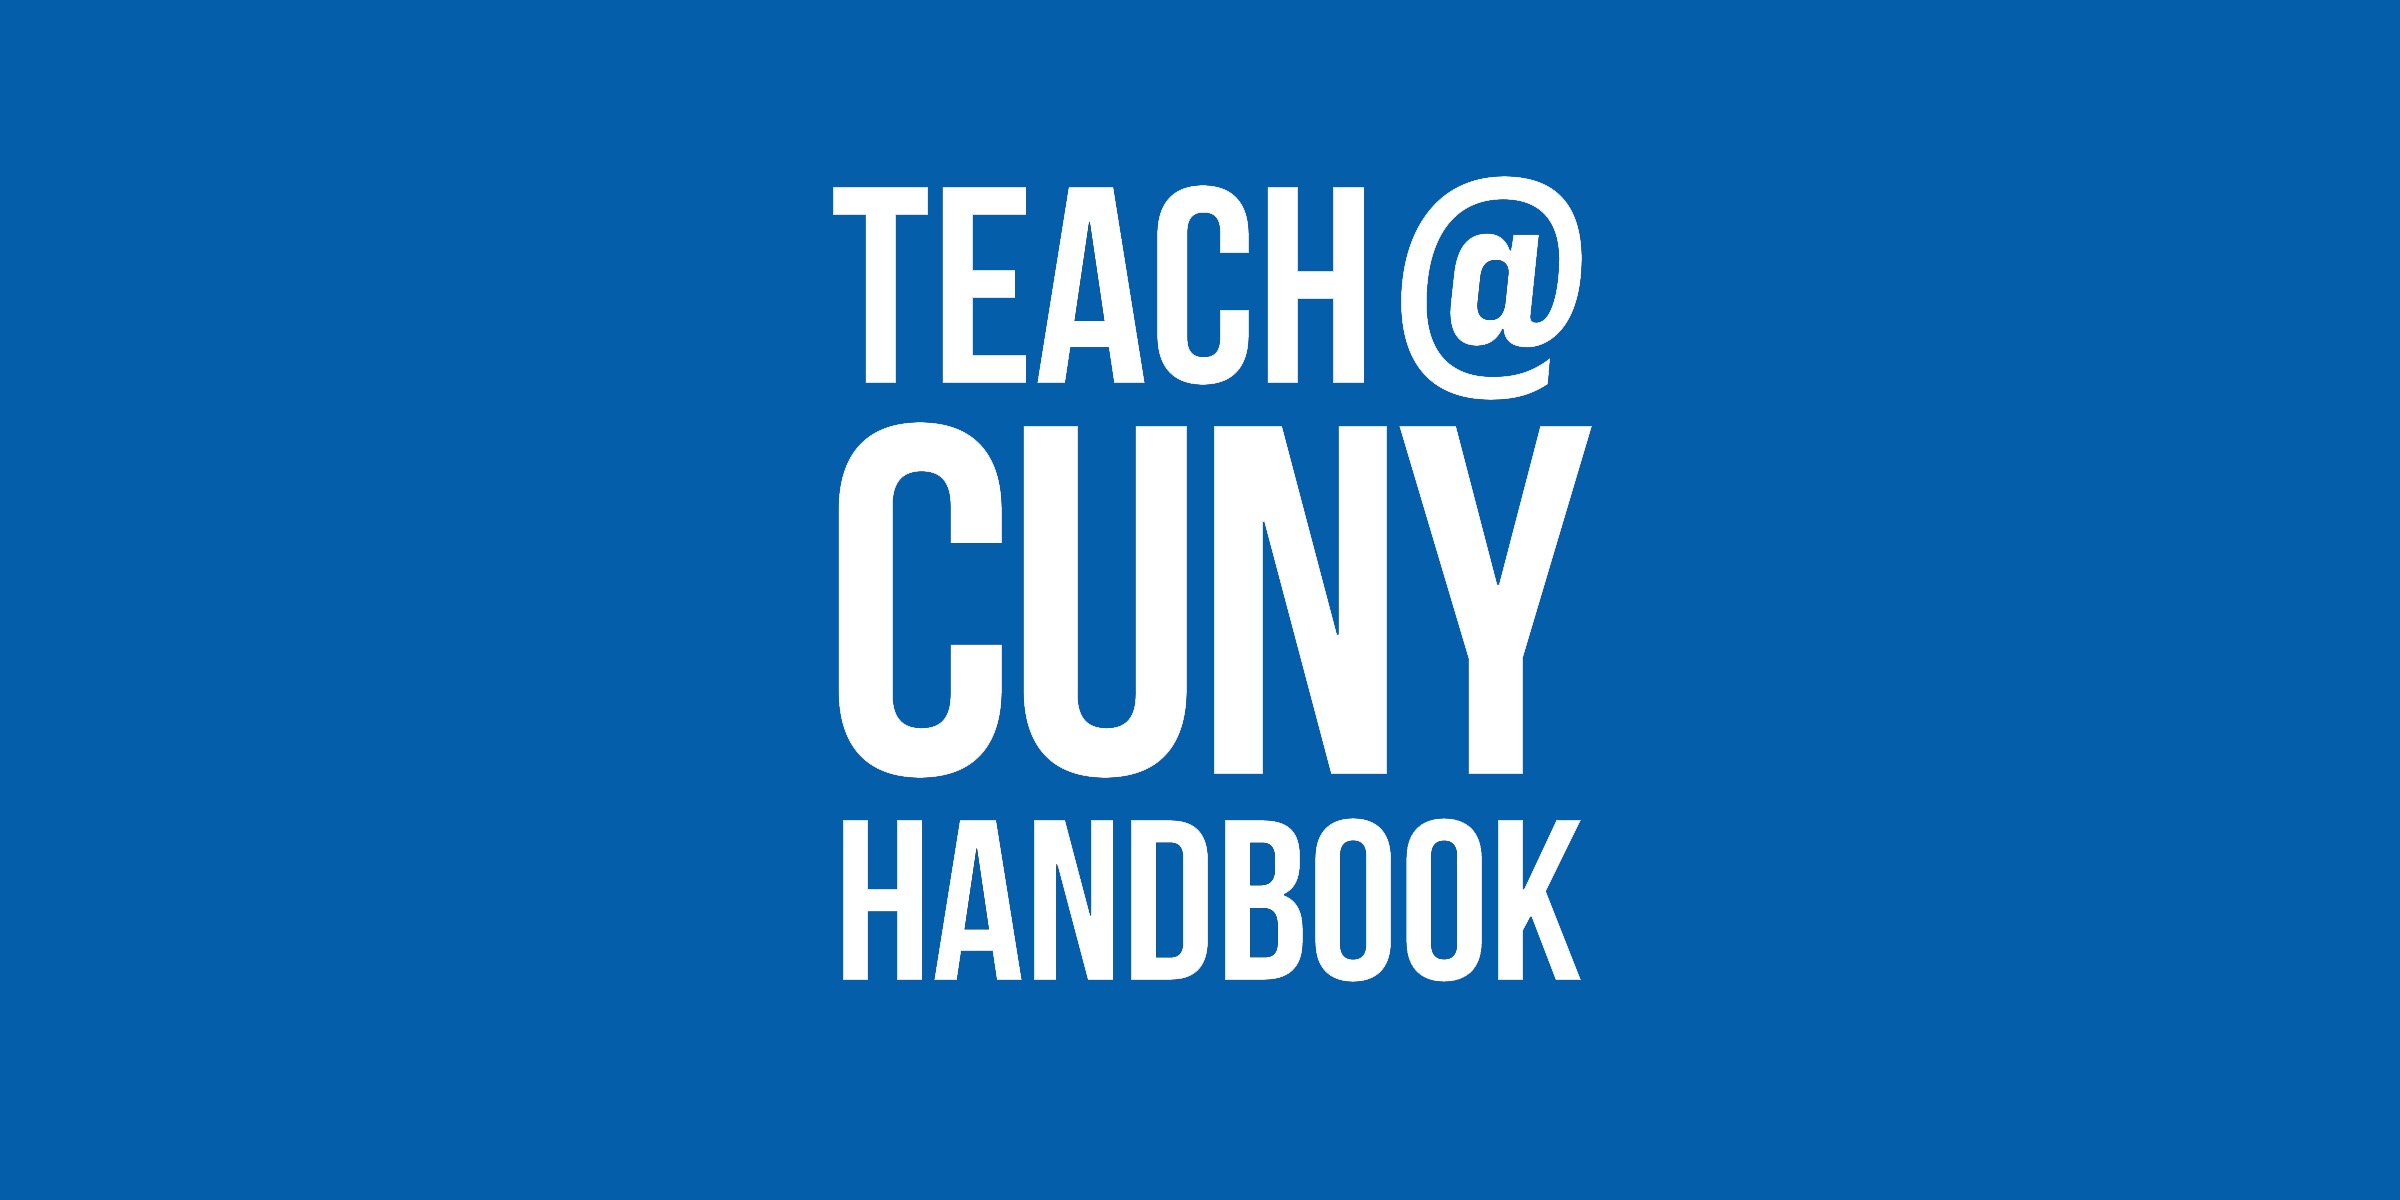 The New TeachCUNY Handbook Visible Pedagogy